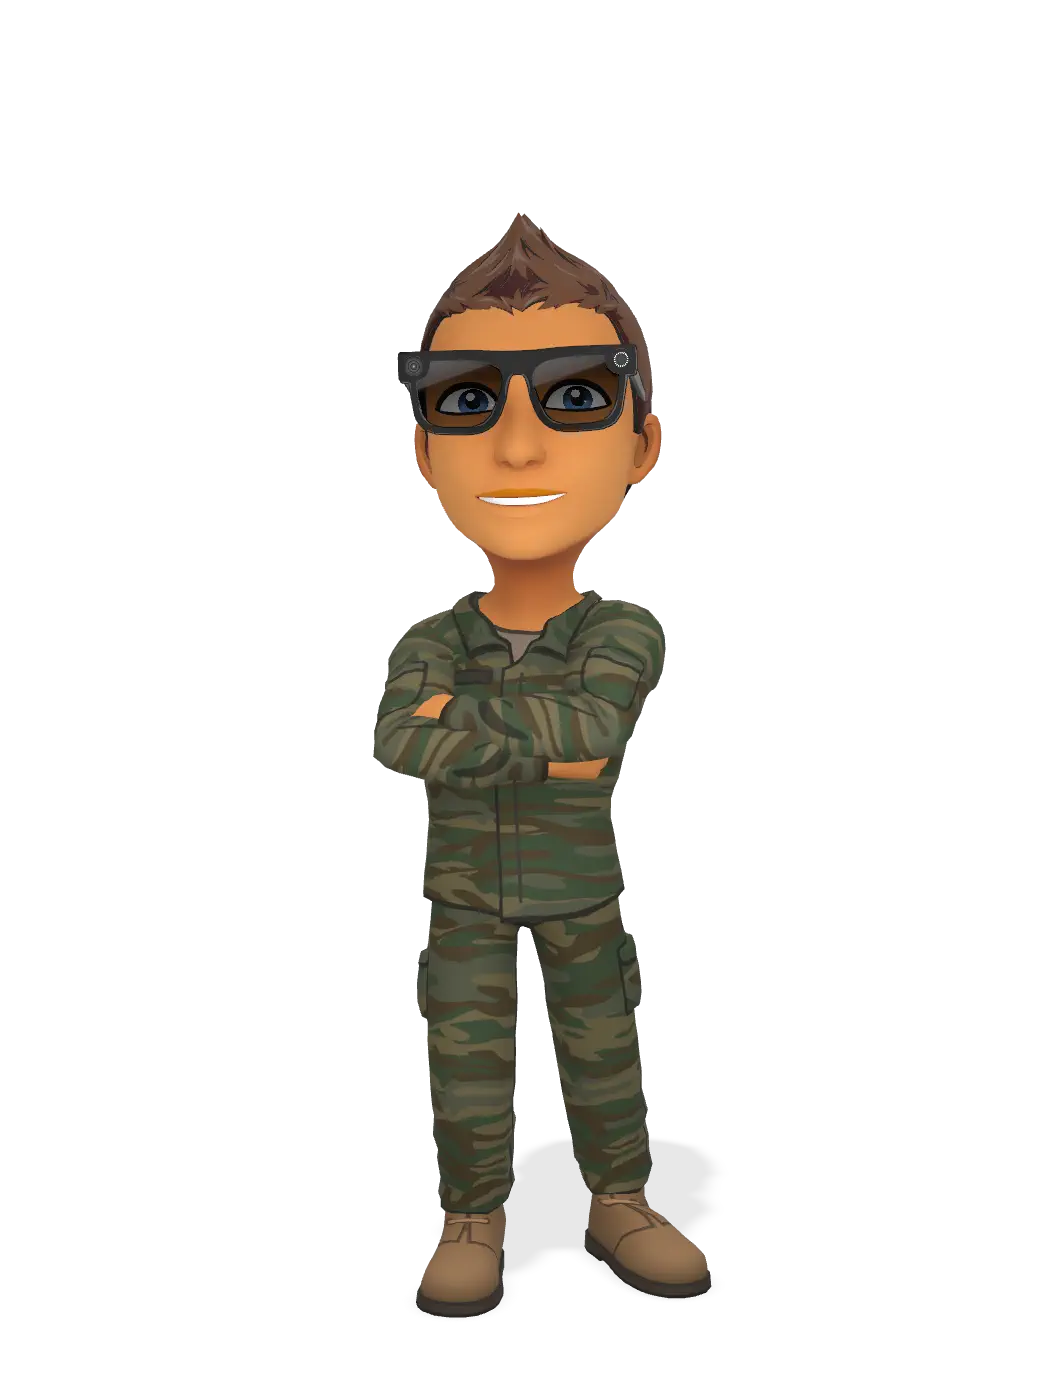 3D Bitmoji for sinistax23 avatar